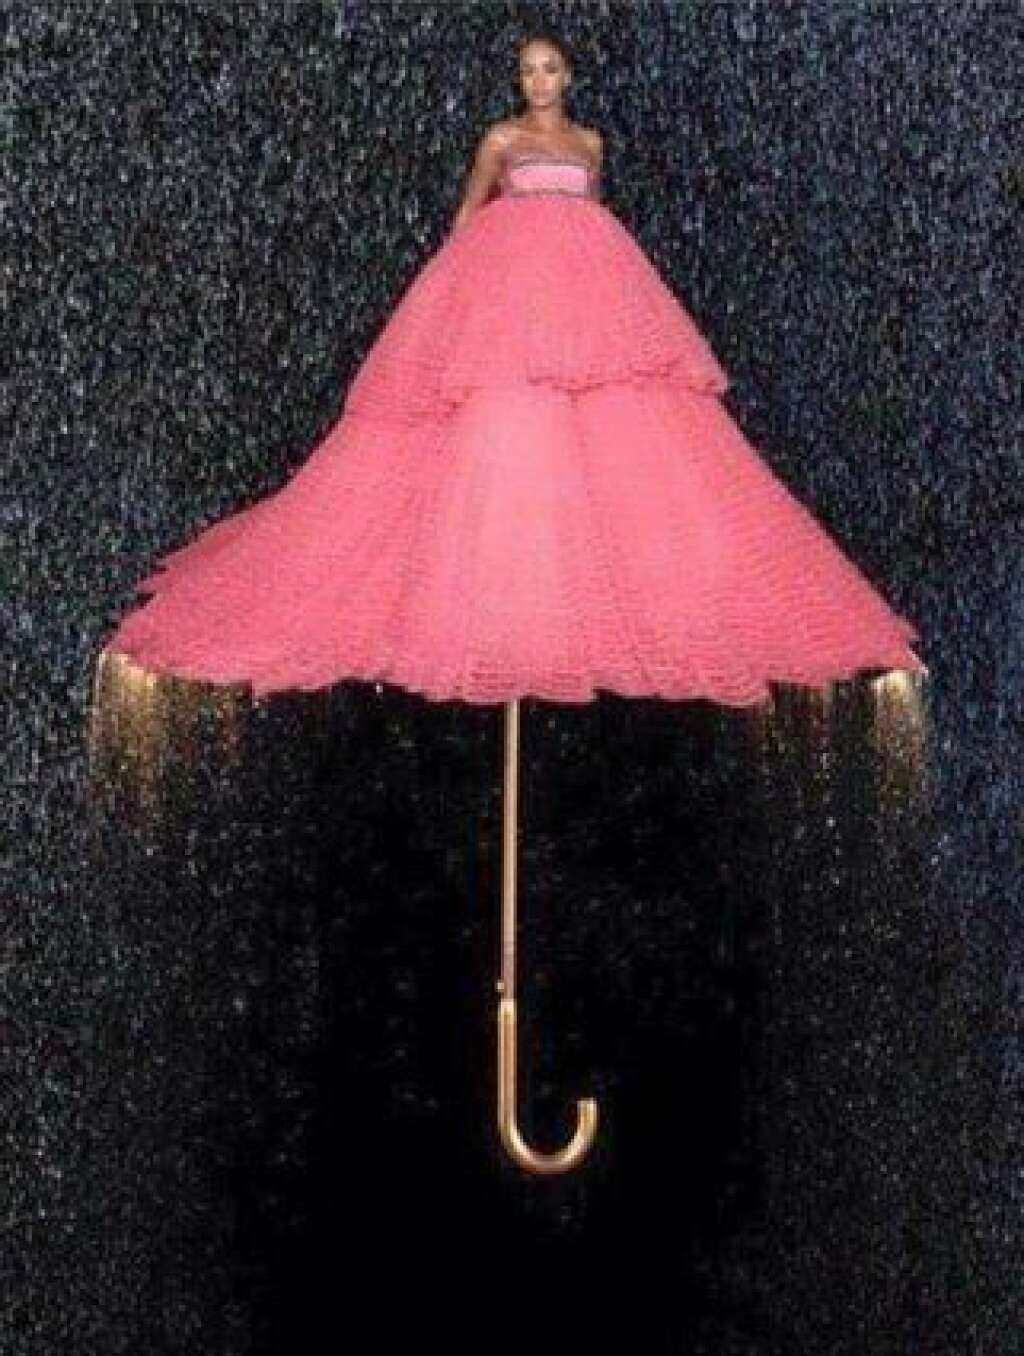 You can stand under my umbrella  (Ella ella, eh eh eh) -